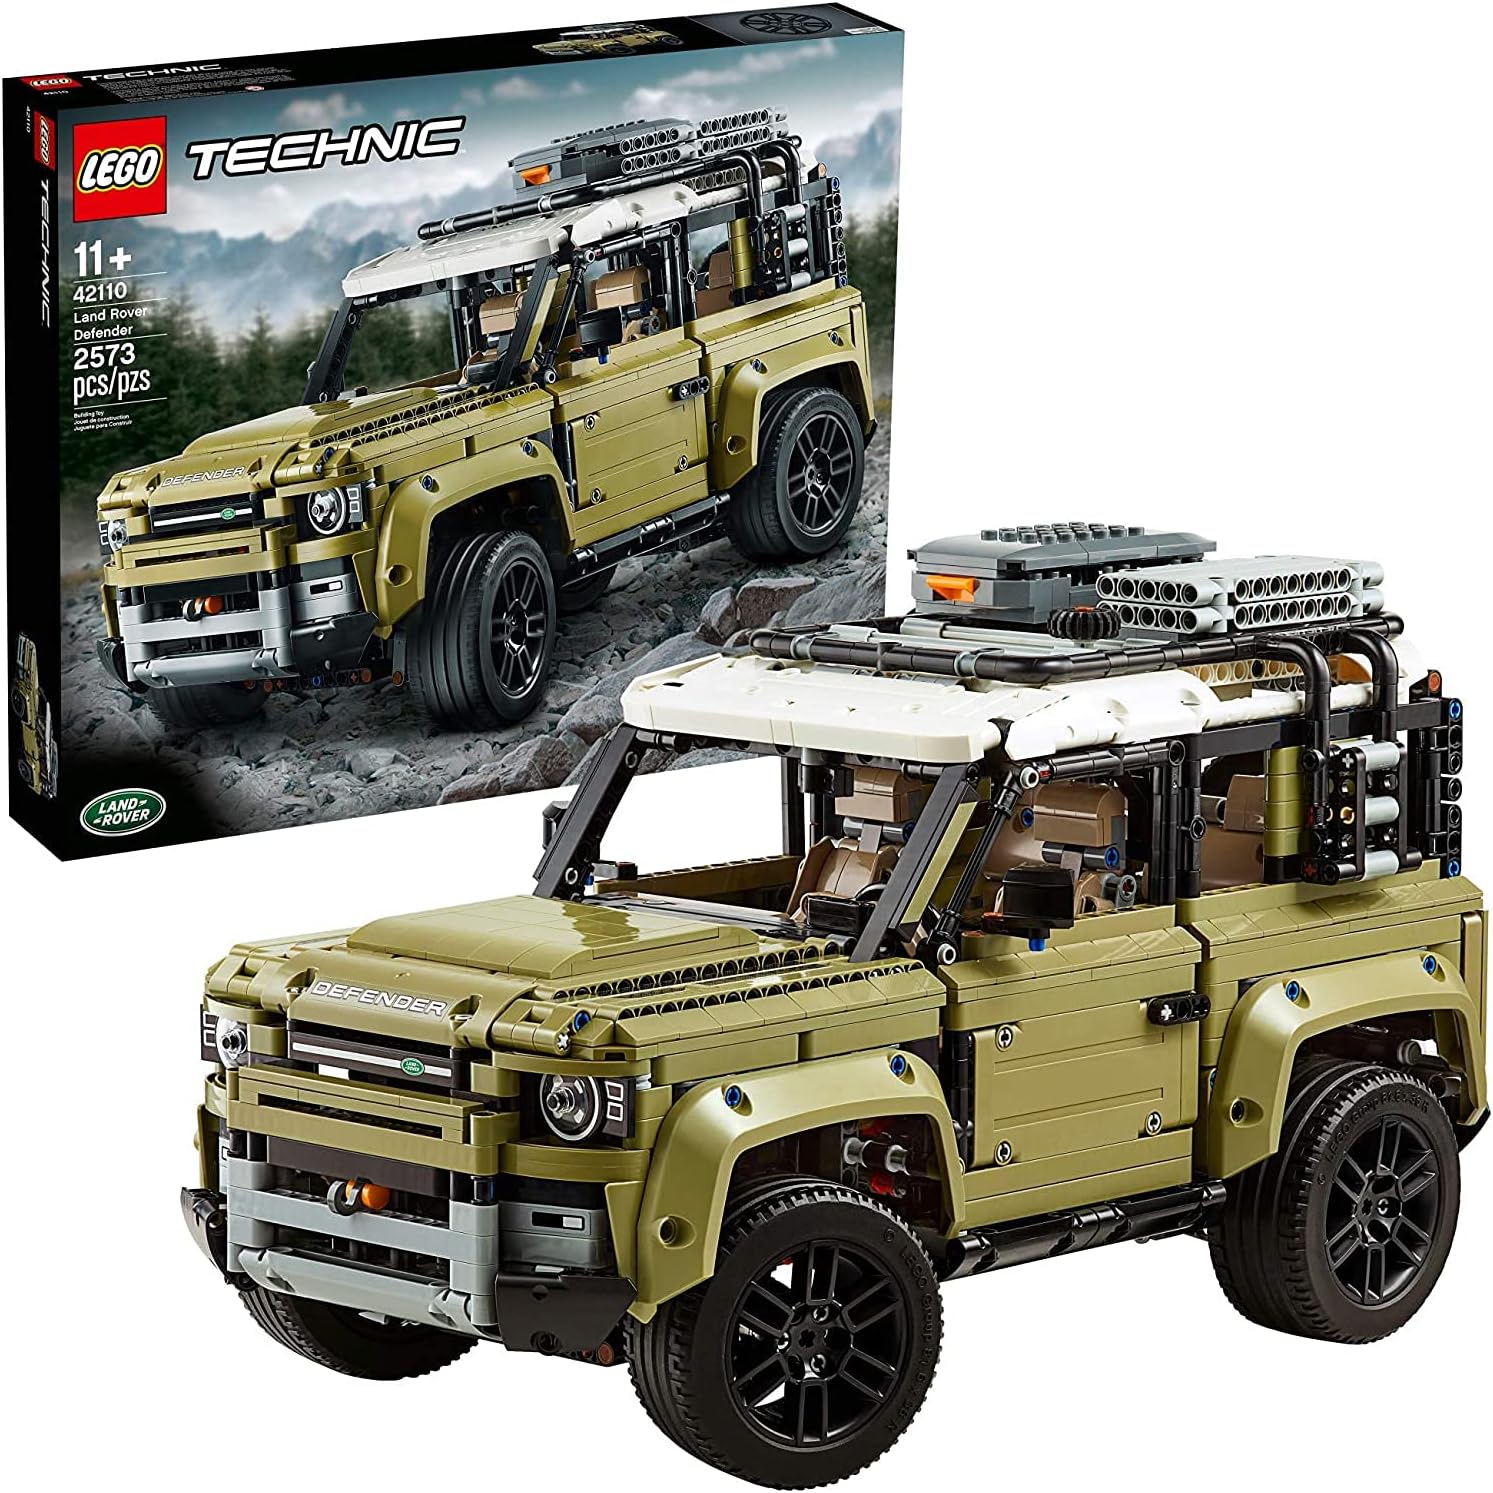 LEGO Technic Land Rover Defender 42110 Building Kit _2573 Pieces_